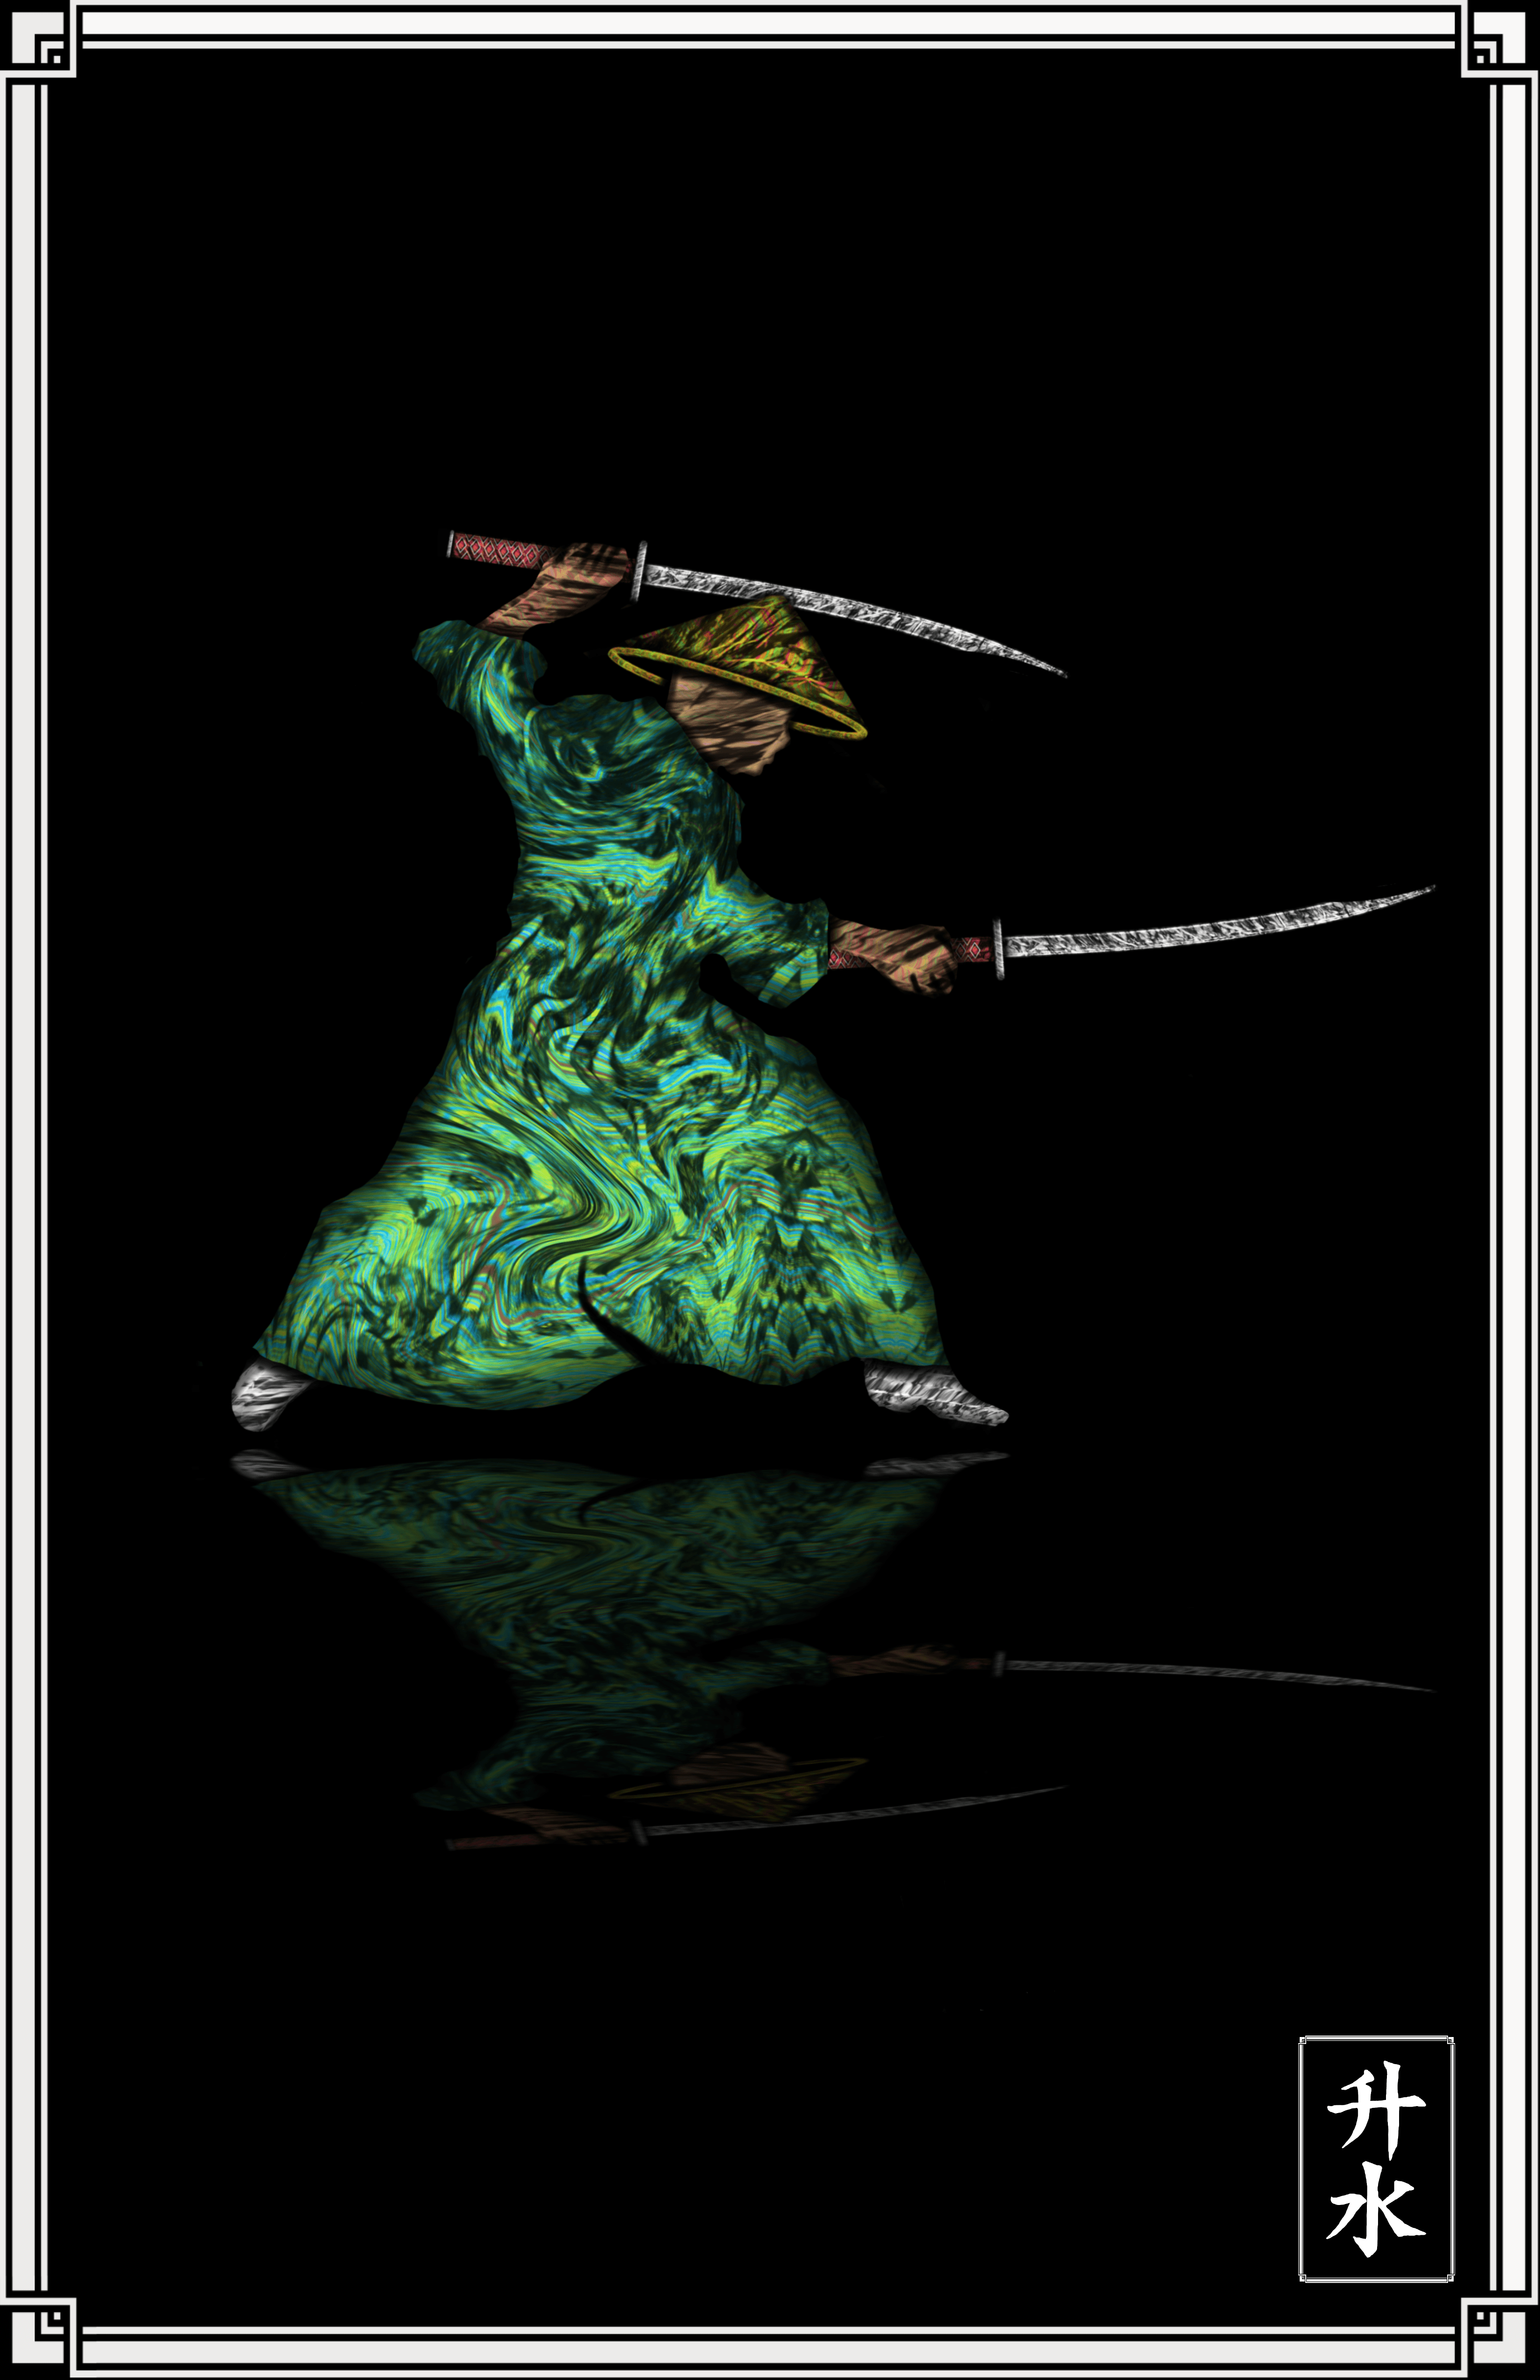 Akimbo Warrior